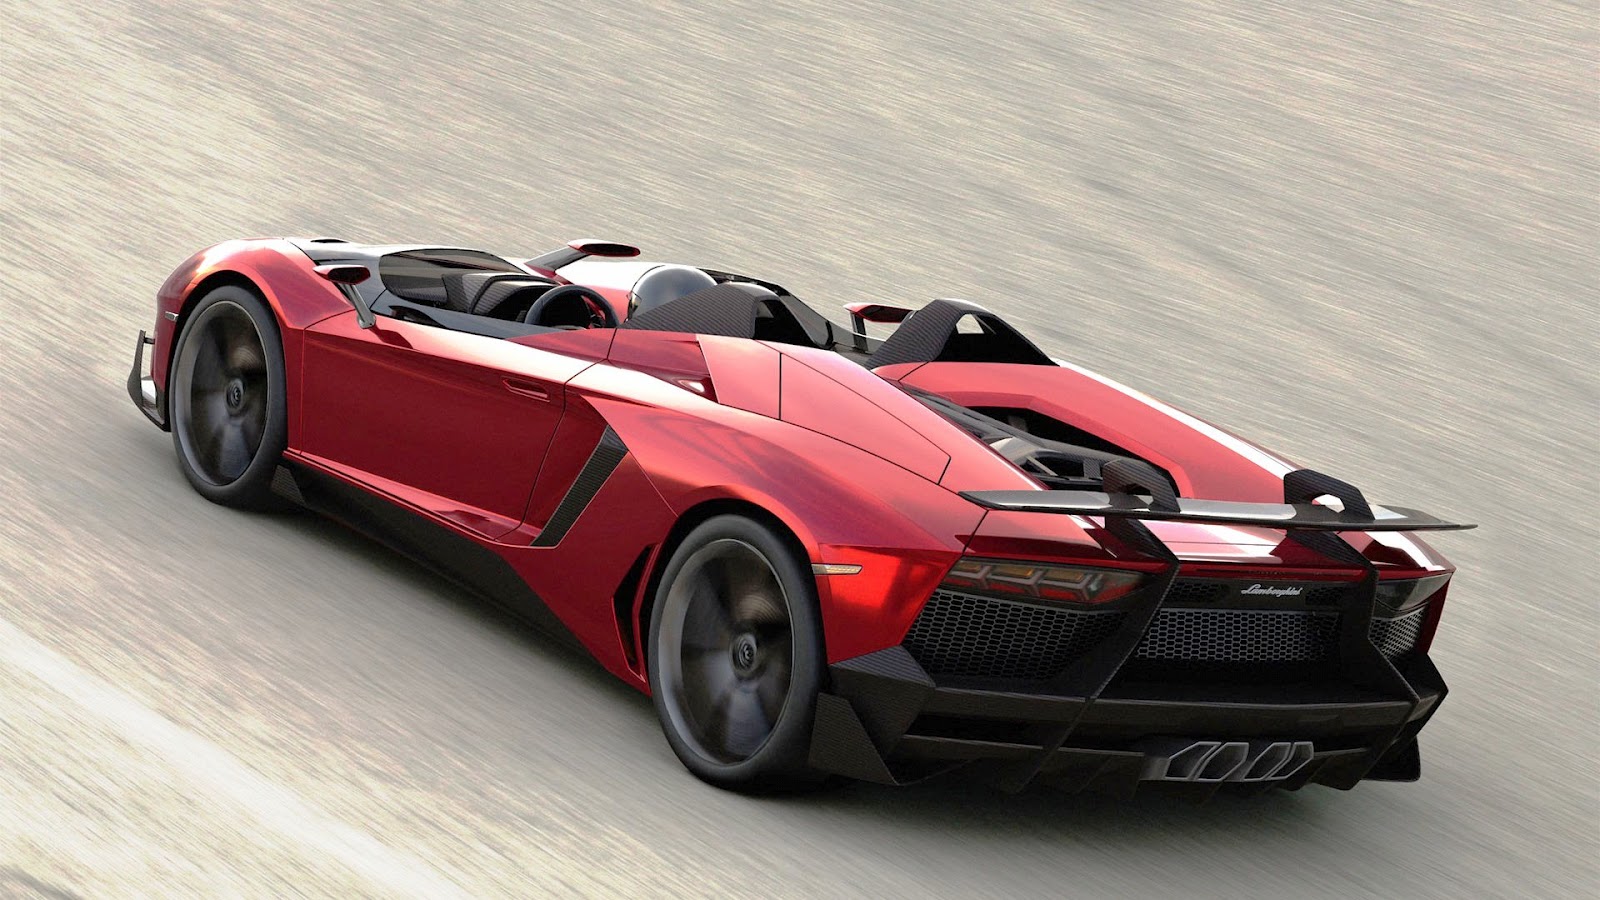 2012 Lamborghini Aventador J Concept - Free Full HD Car ...